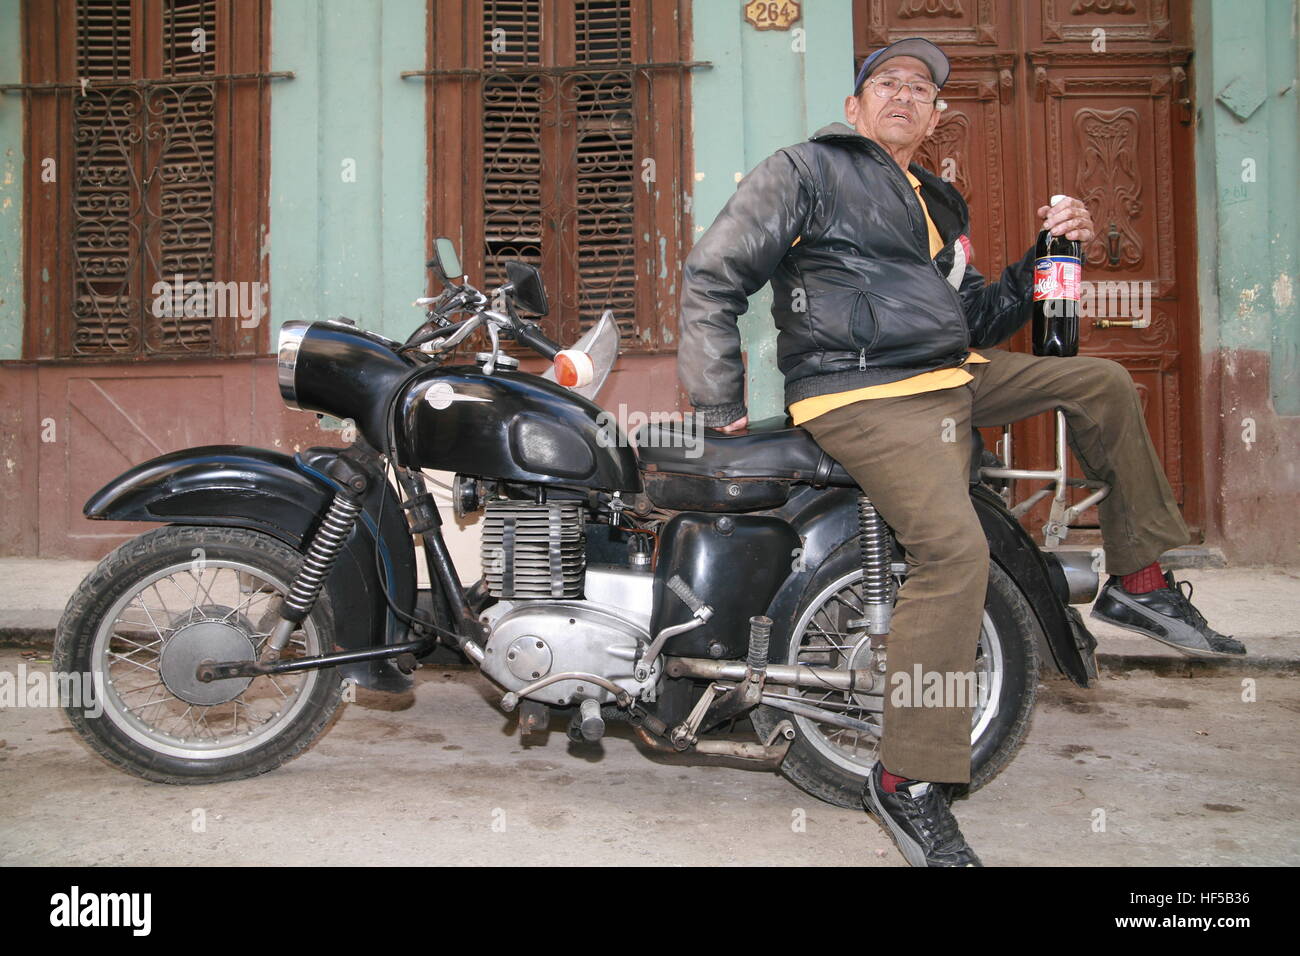 An elderly man sitting on his vintage motorcycle holding a bottle of Cuban cola (tu cola), Havana, Cuba, Caribbean, Americas Stock Photo